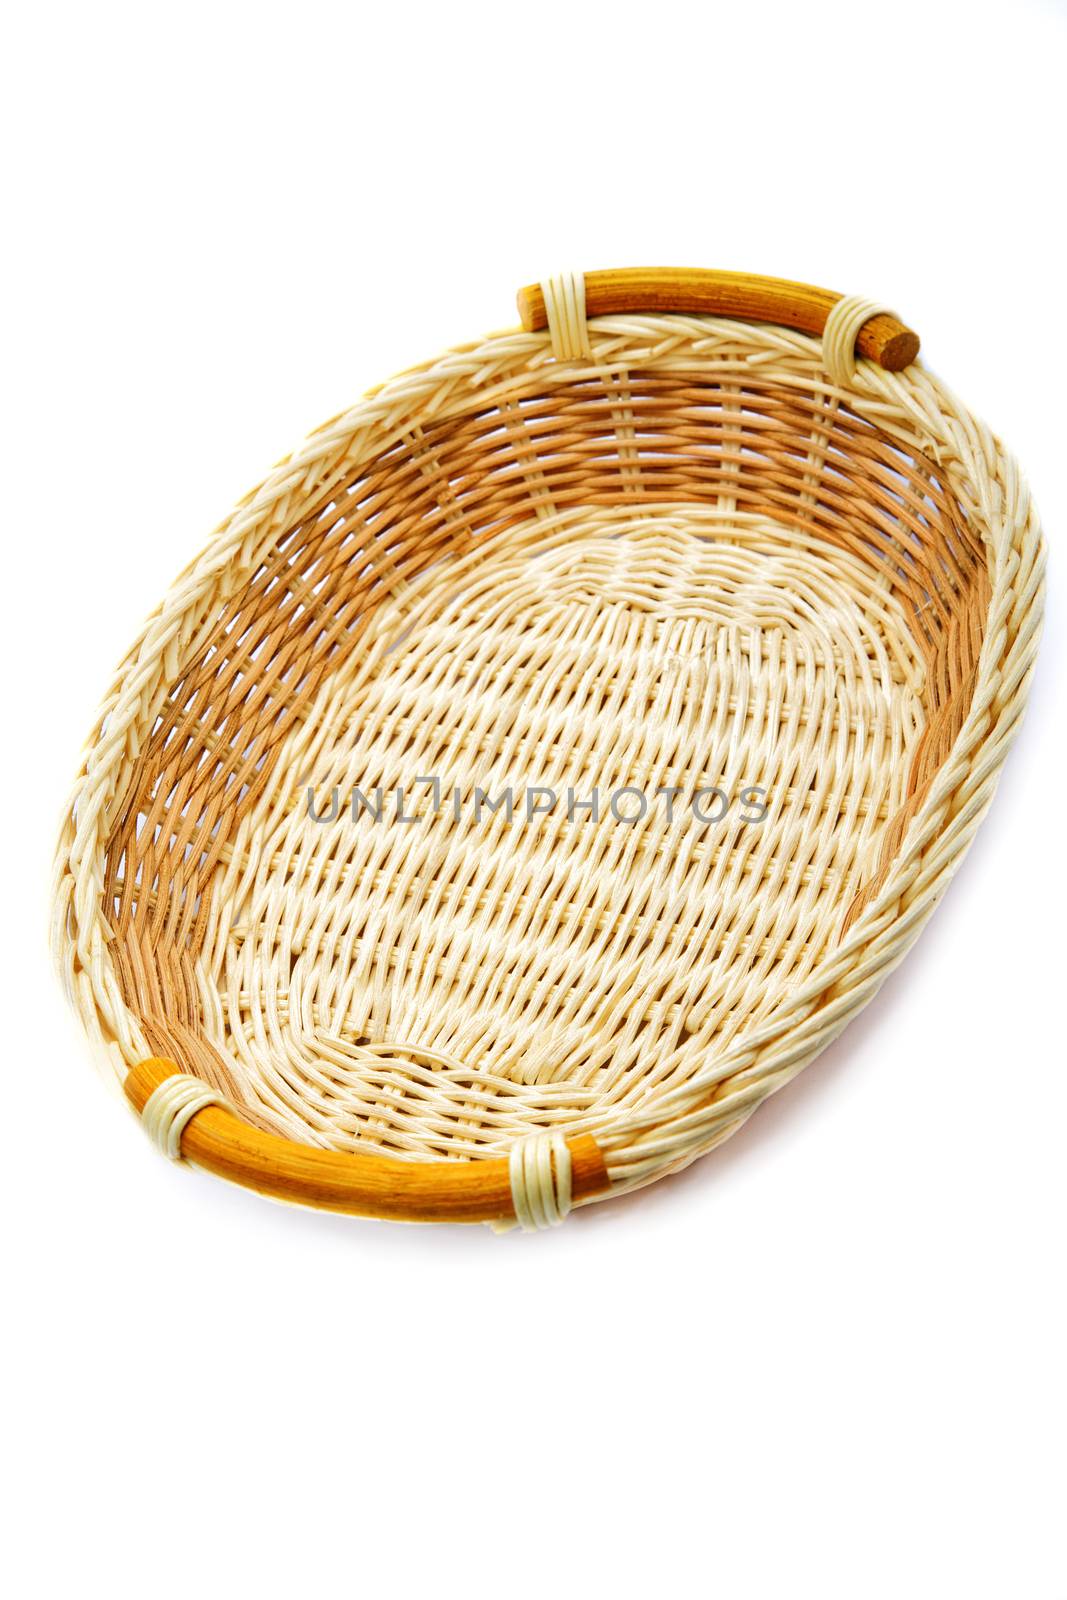 Wattled basket isolated on a white background